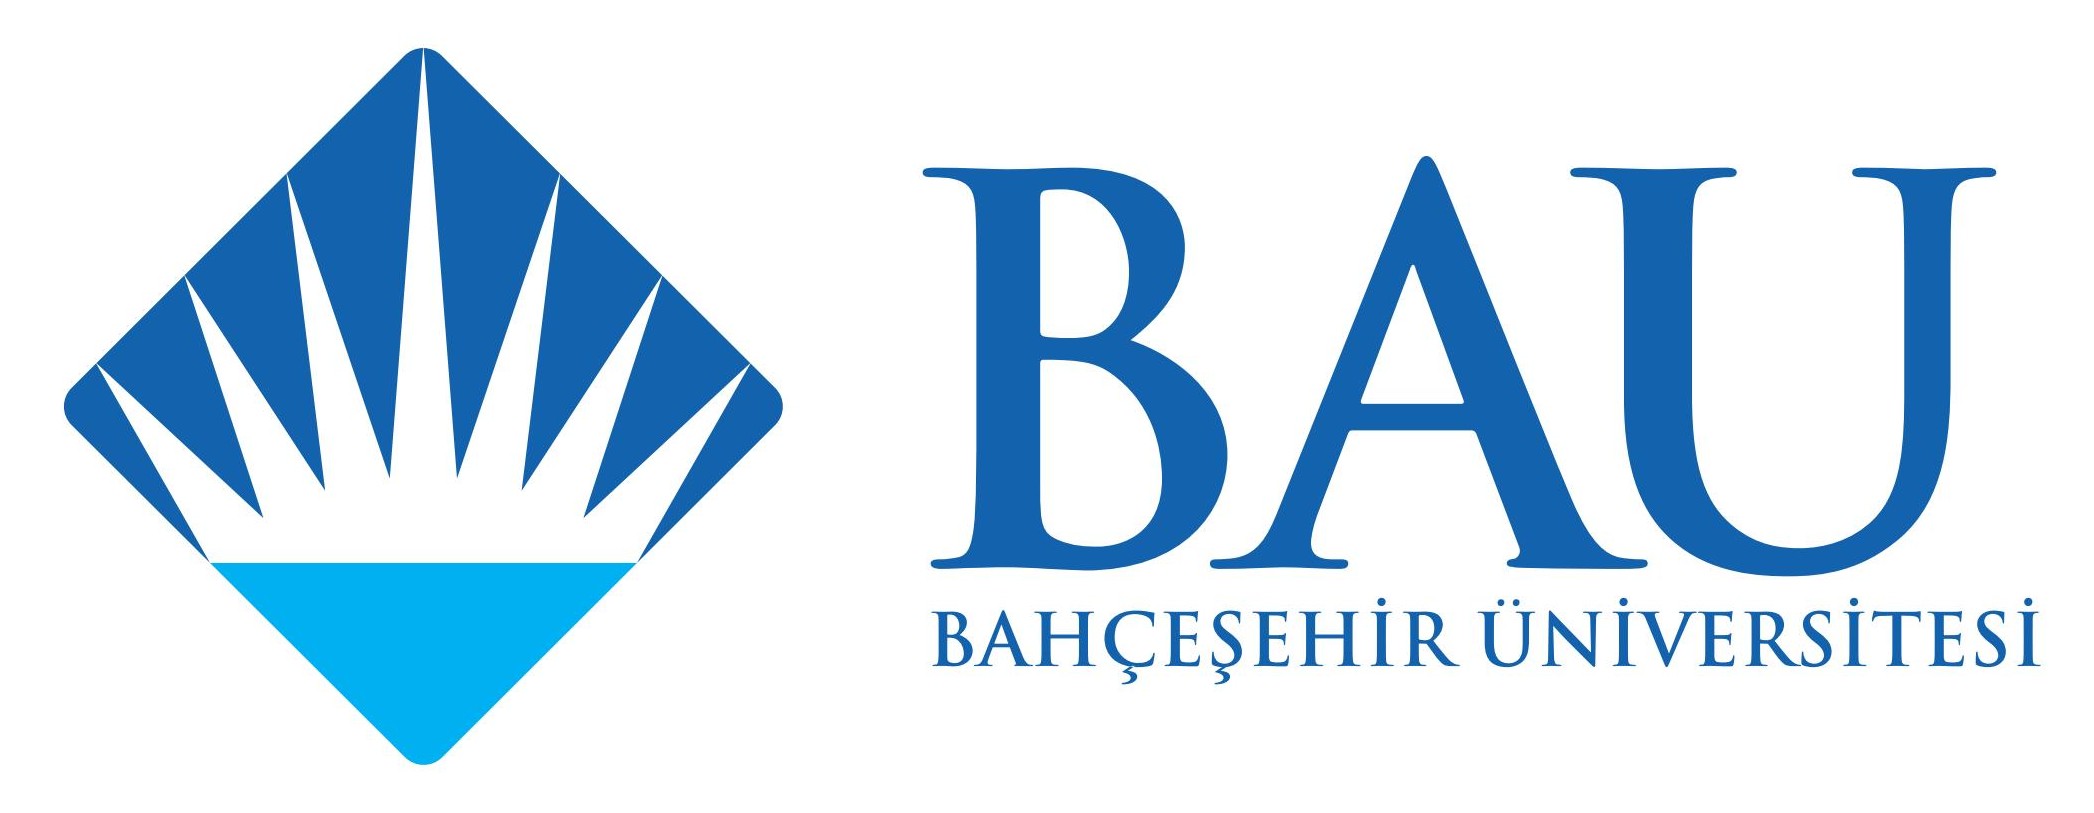 bau-bahcesehir-universitesi-logo